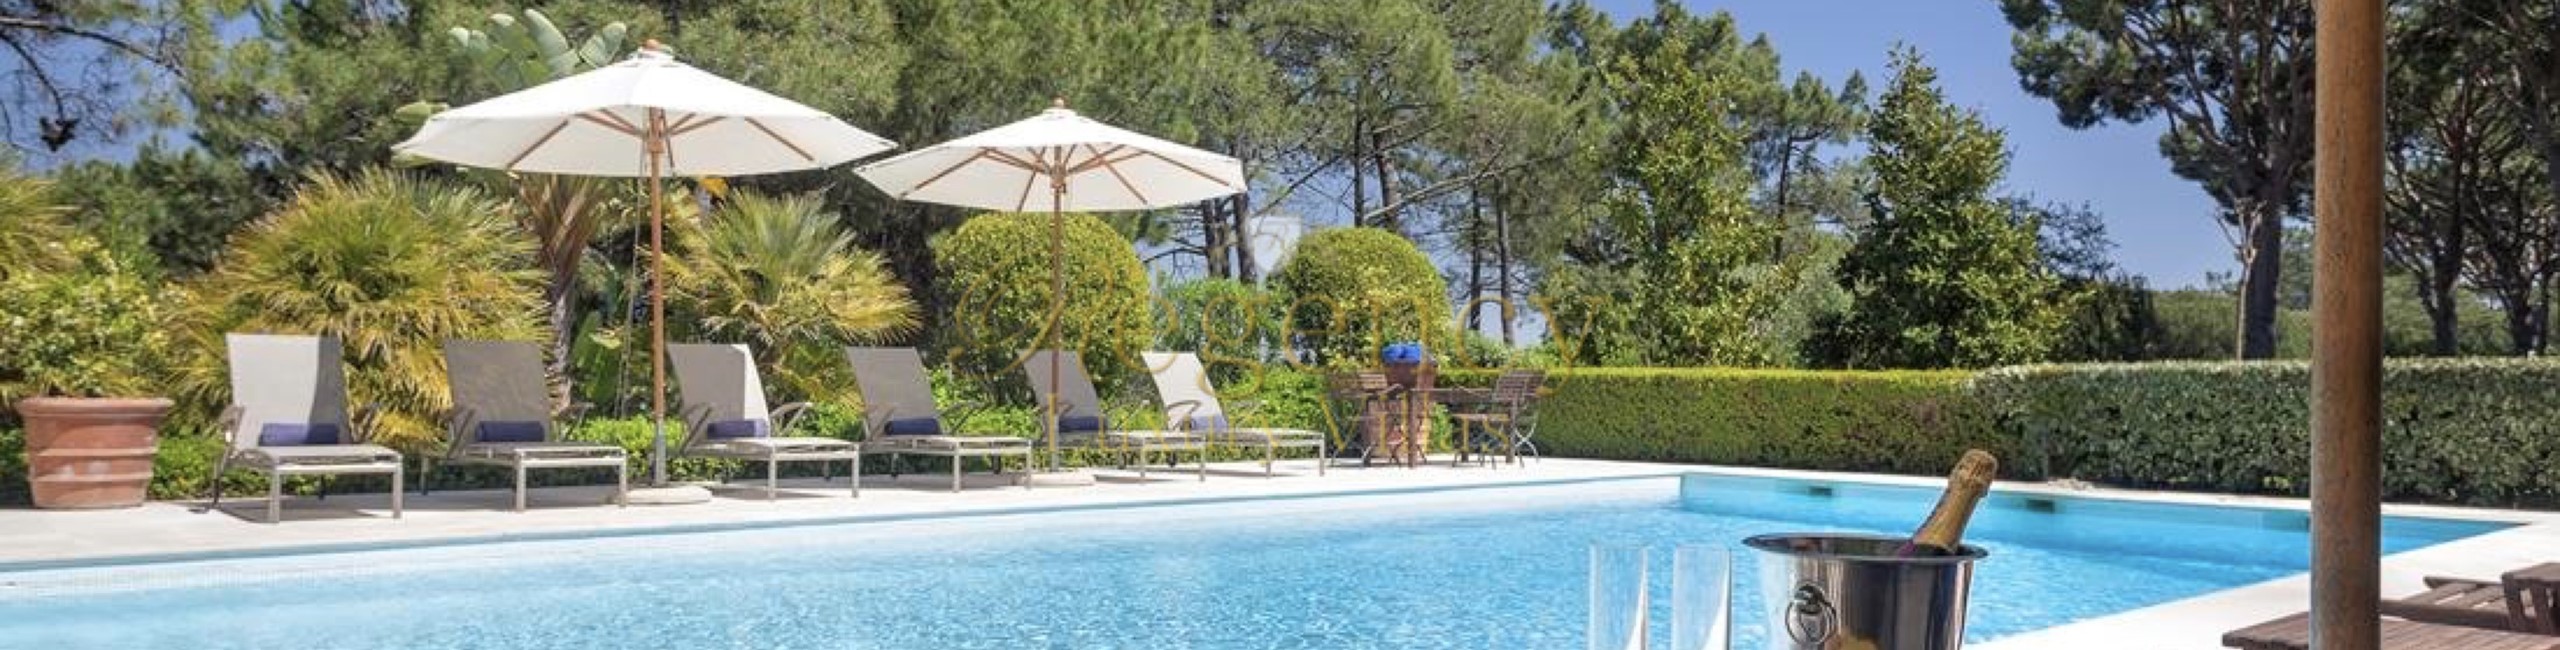 Holiday Villa To Rent In Quinta Do Lago Algarve Portugal